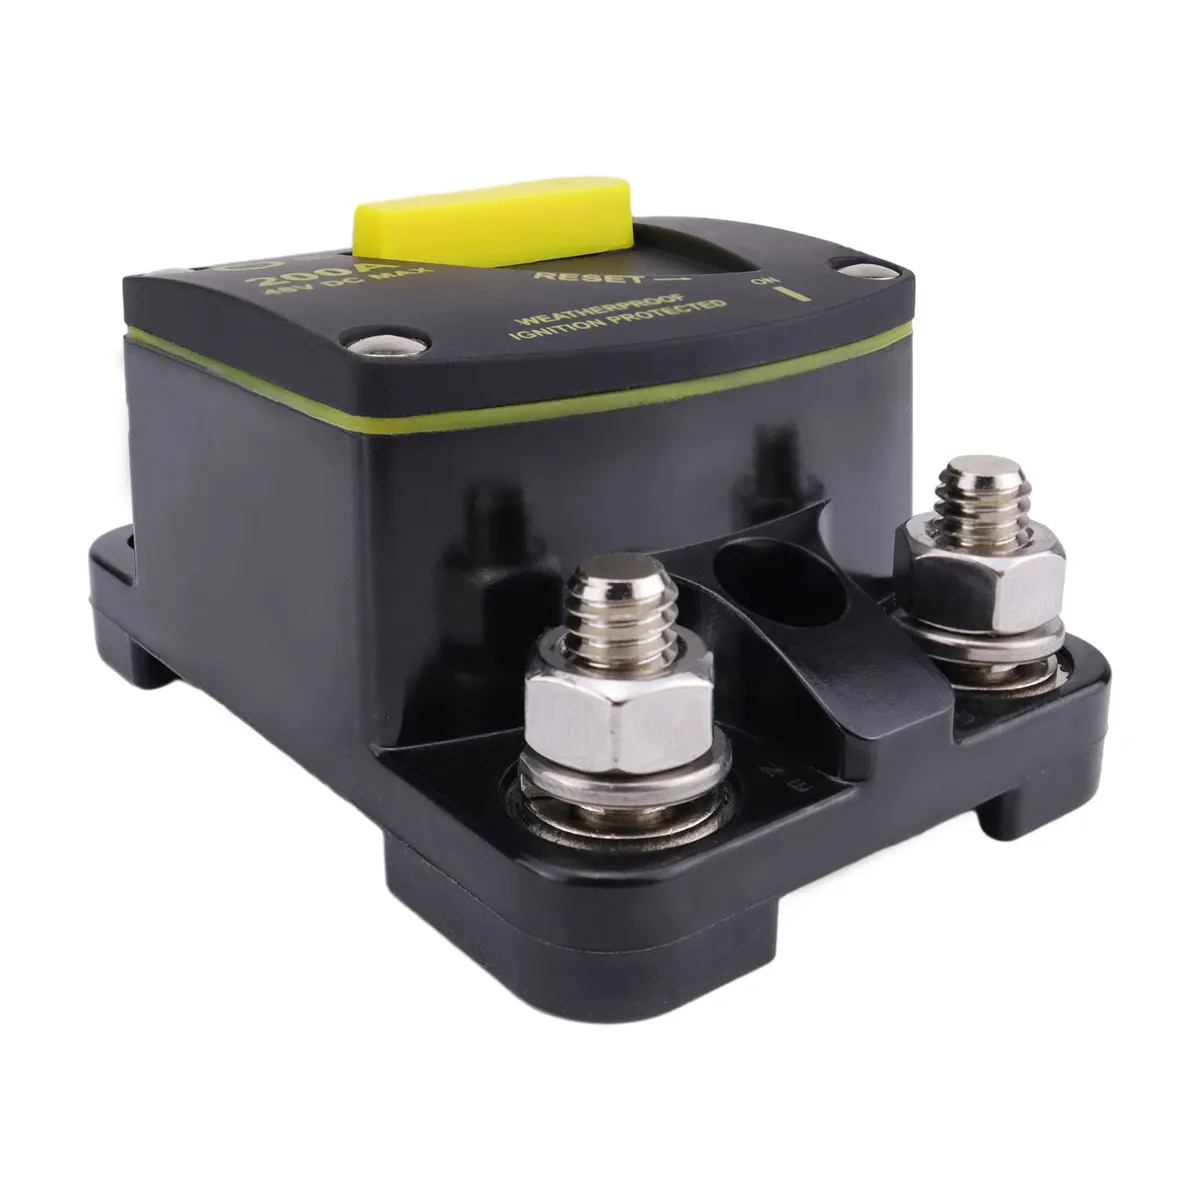 50ACircuit Breaker Fuse Reset 12-48V DC Car Audio Amplifier Breaker WaterproofHigh current short circuit overload protection